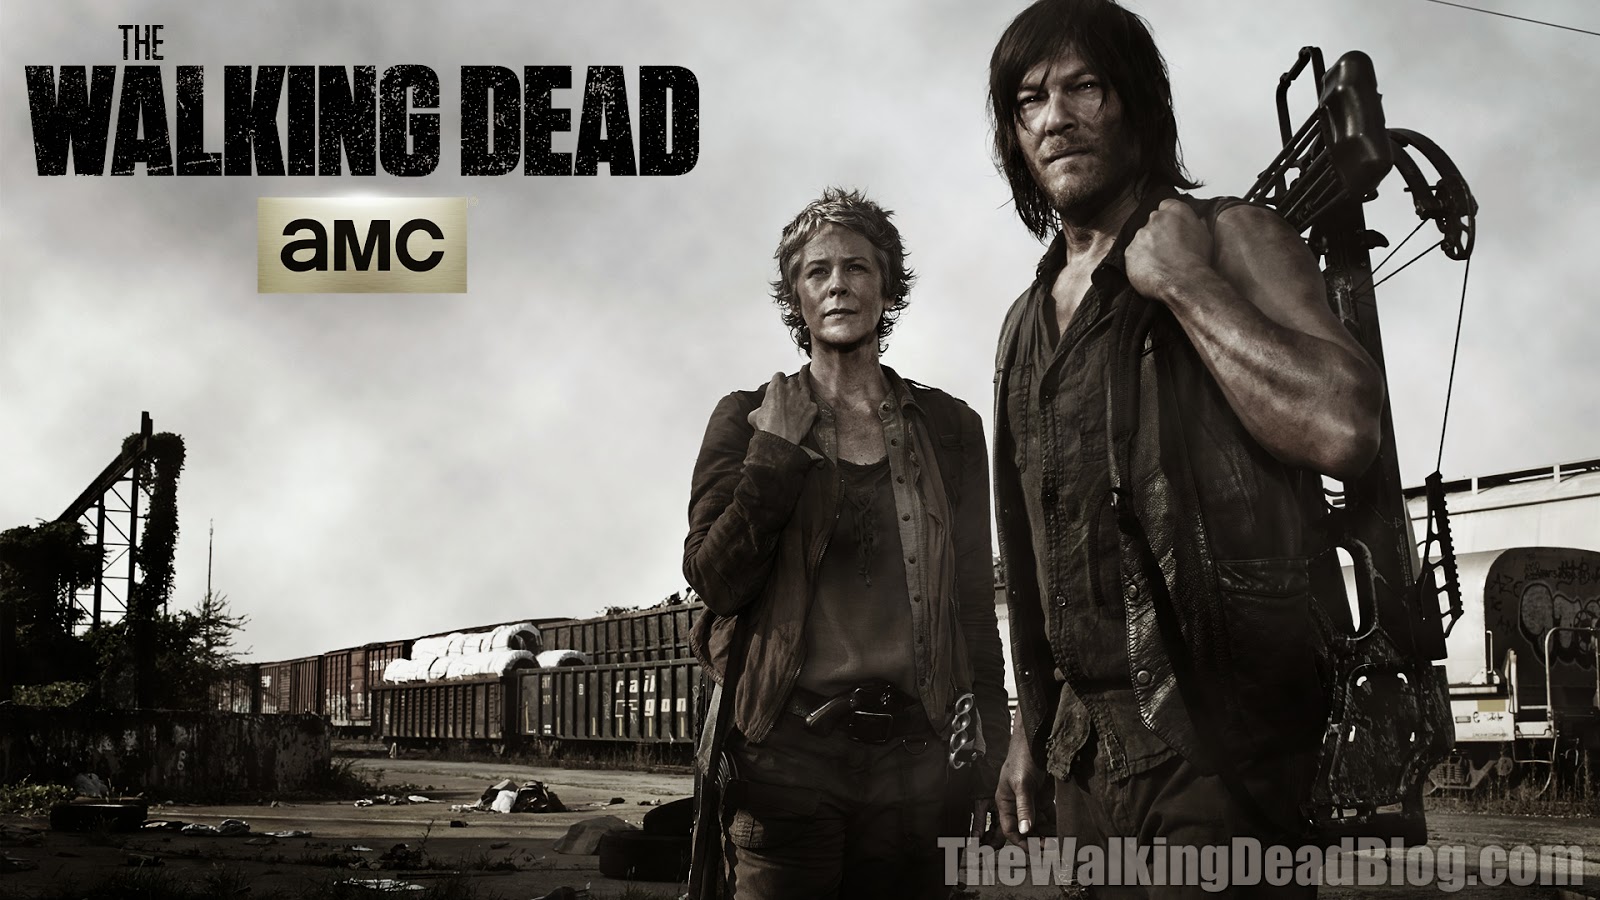  Dead Blog New Walking Dead Season 5 Wallpaper with Daryl and Carol